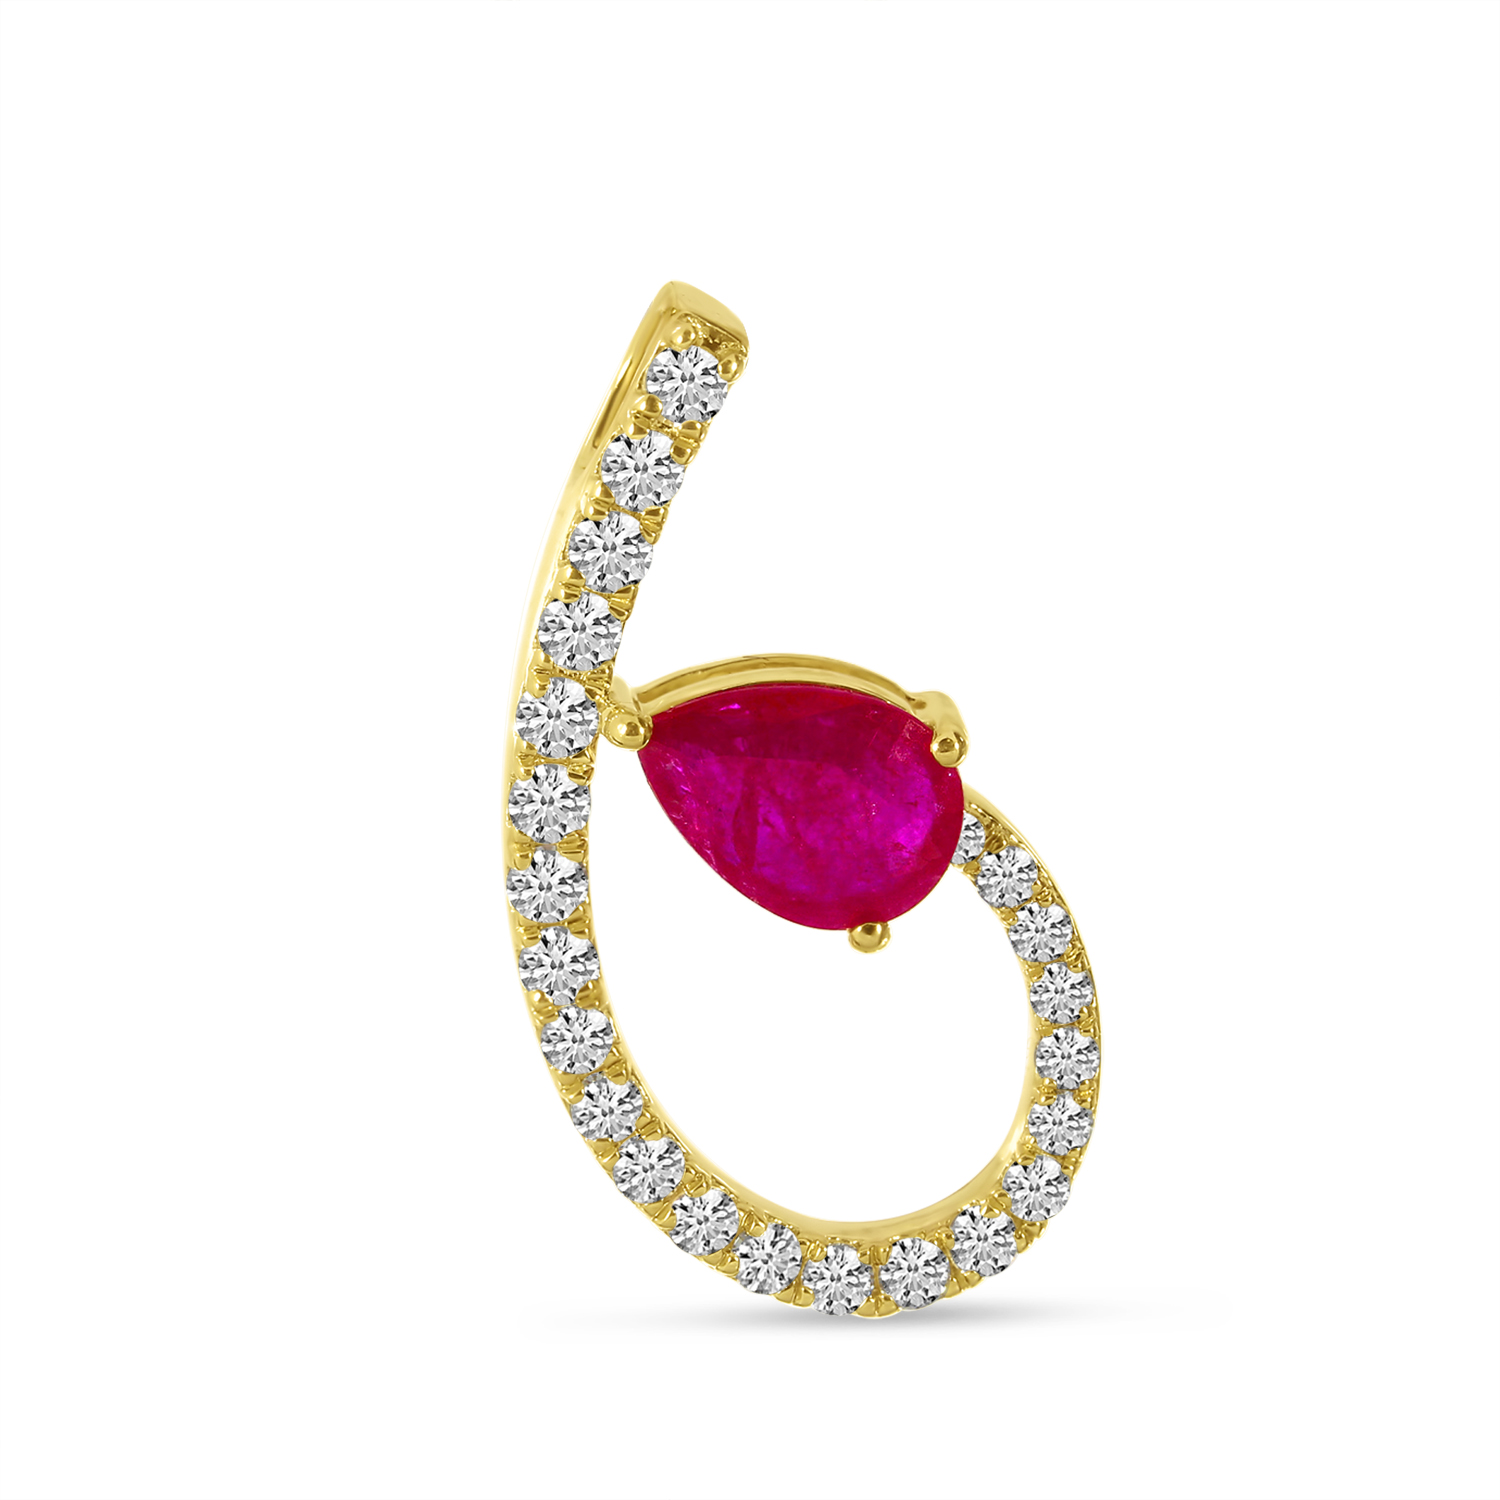 14K Yellow Gold Precious Ruby and Diamond Oval Swirl Pendant 